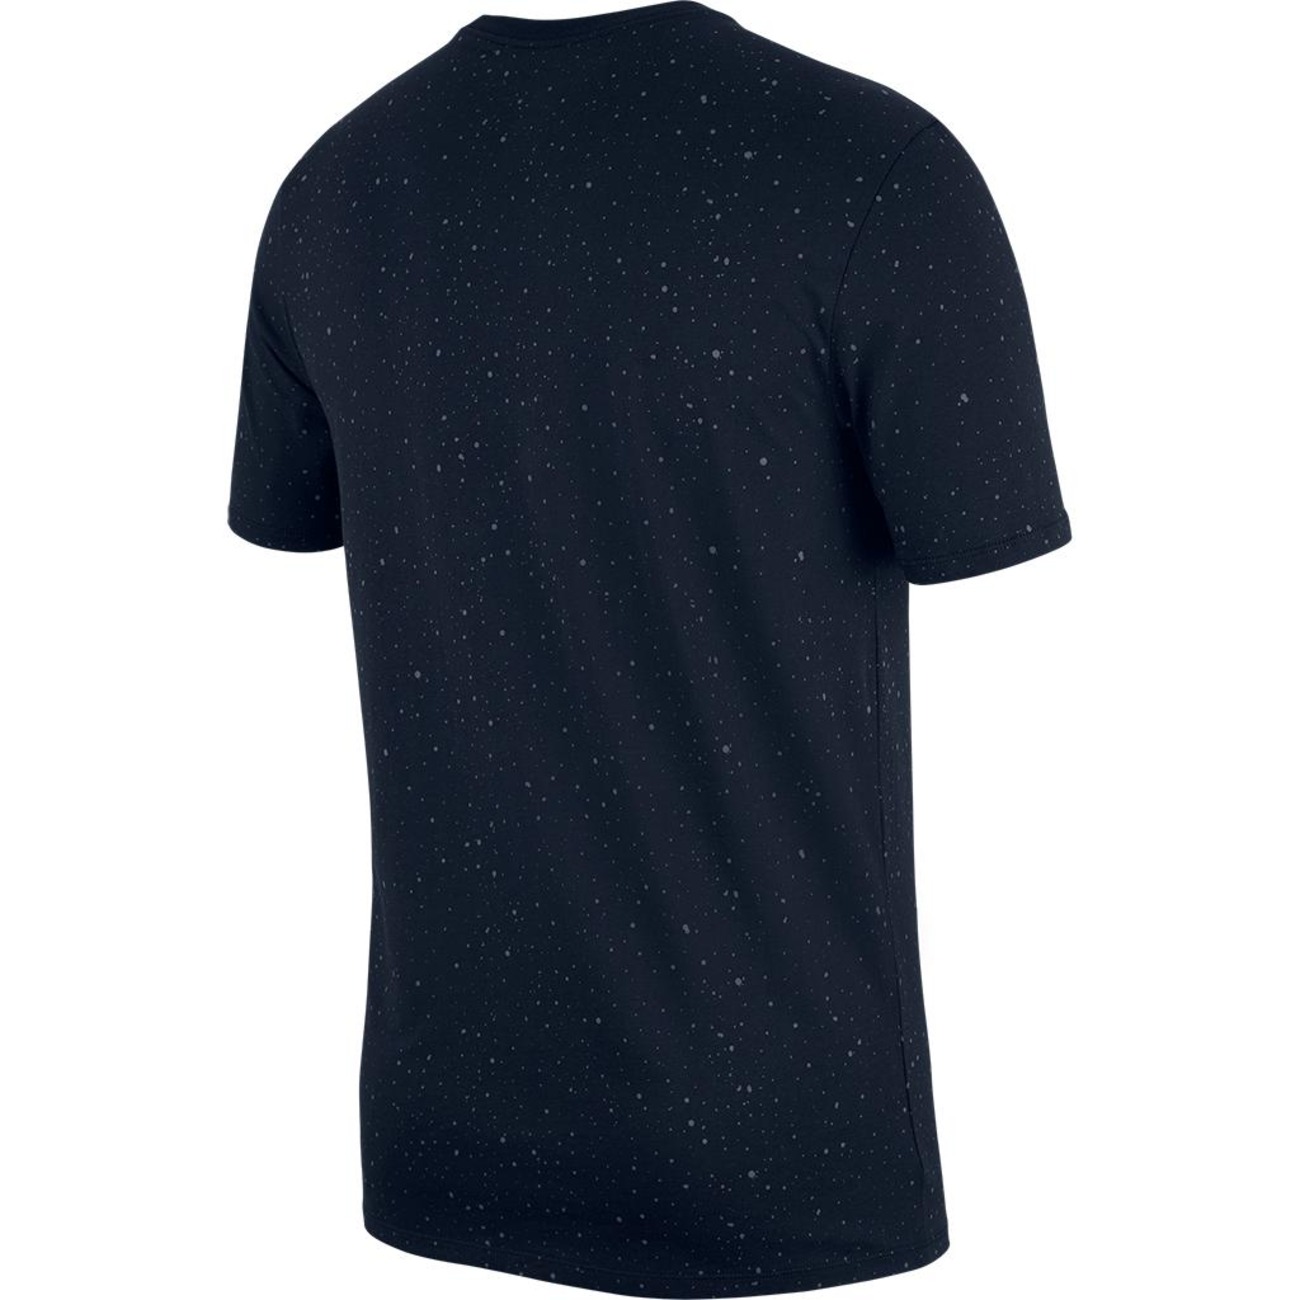 Camiseta Jordan Sportswear Flight Cement Masculina - Foto 2